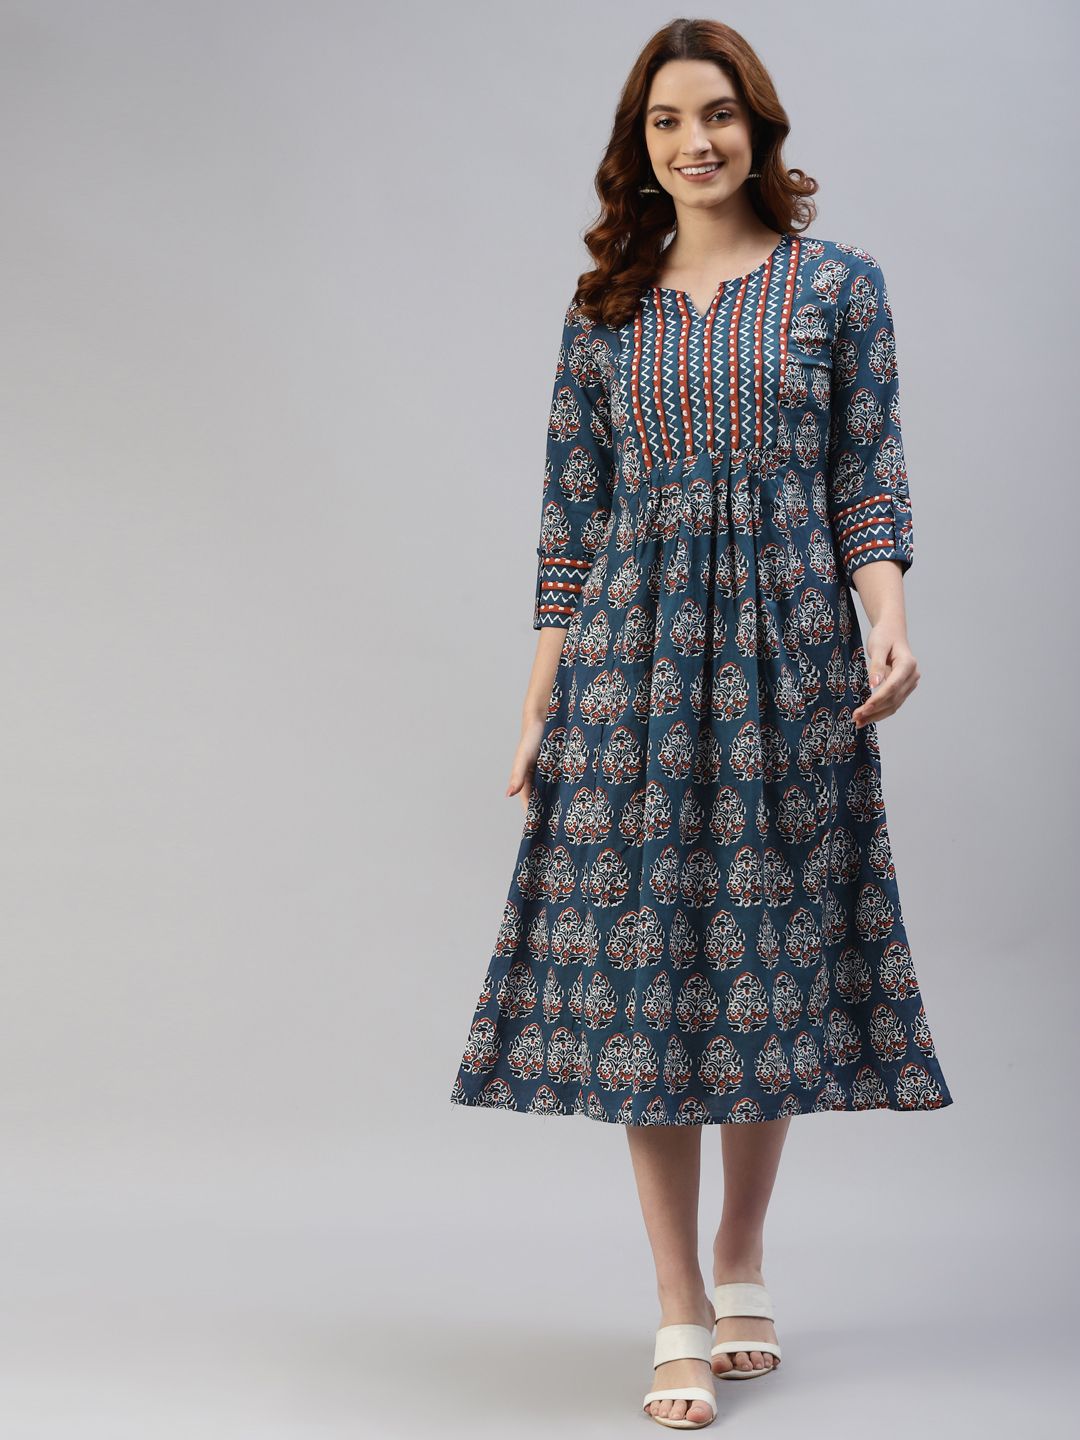 SVARCHI Women Teal Blue & White Ethnic Motifs Printed A-Line Midi Dress Price in India